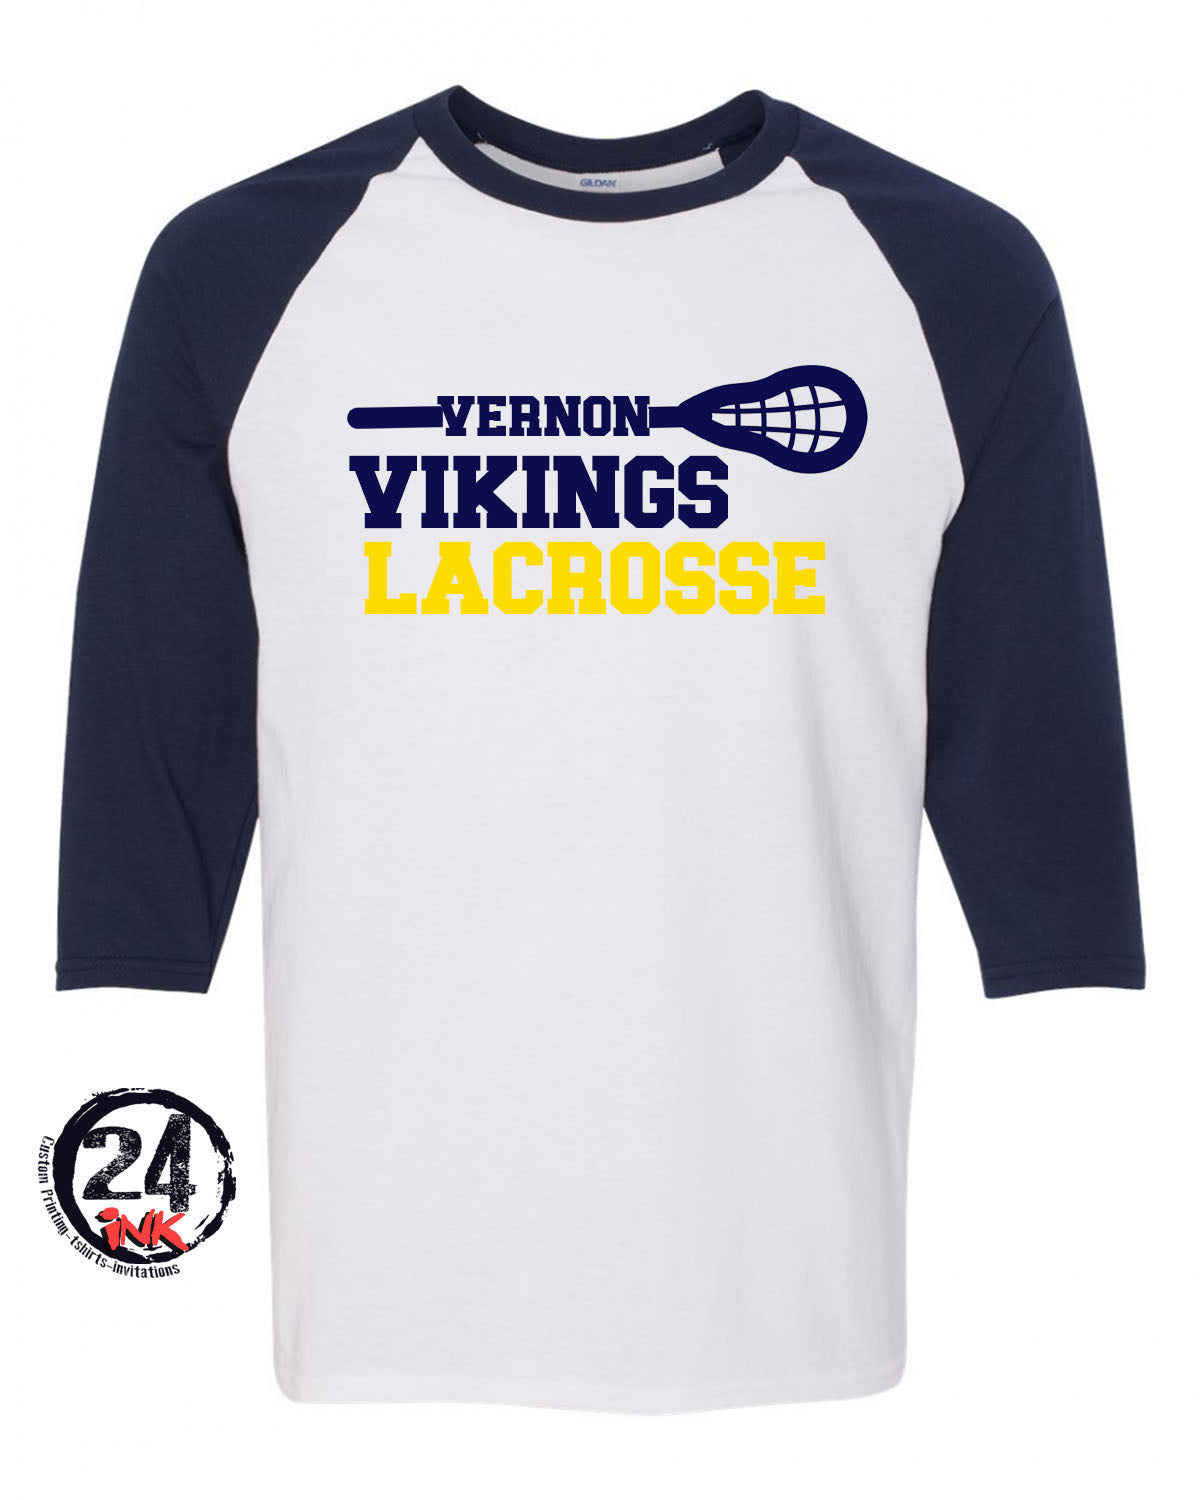 Vernon Vikings Lacrosse raglan shirt